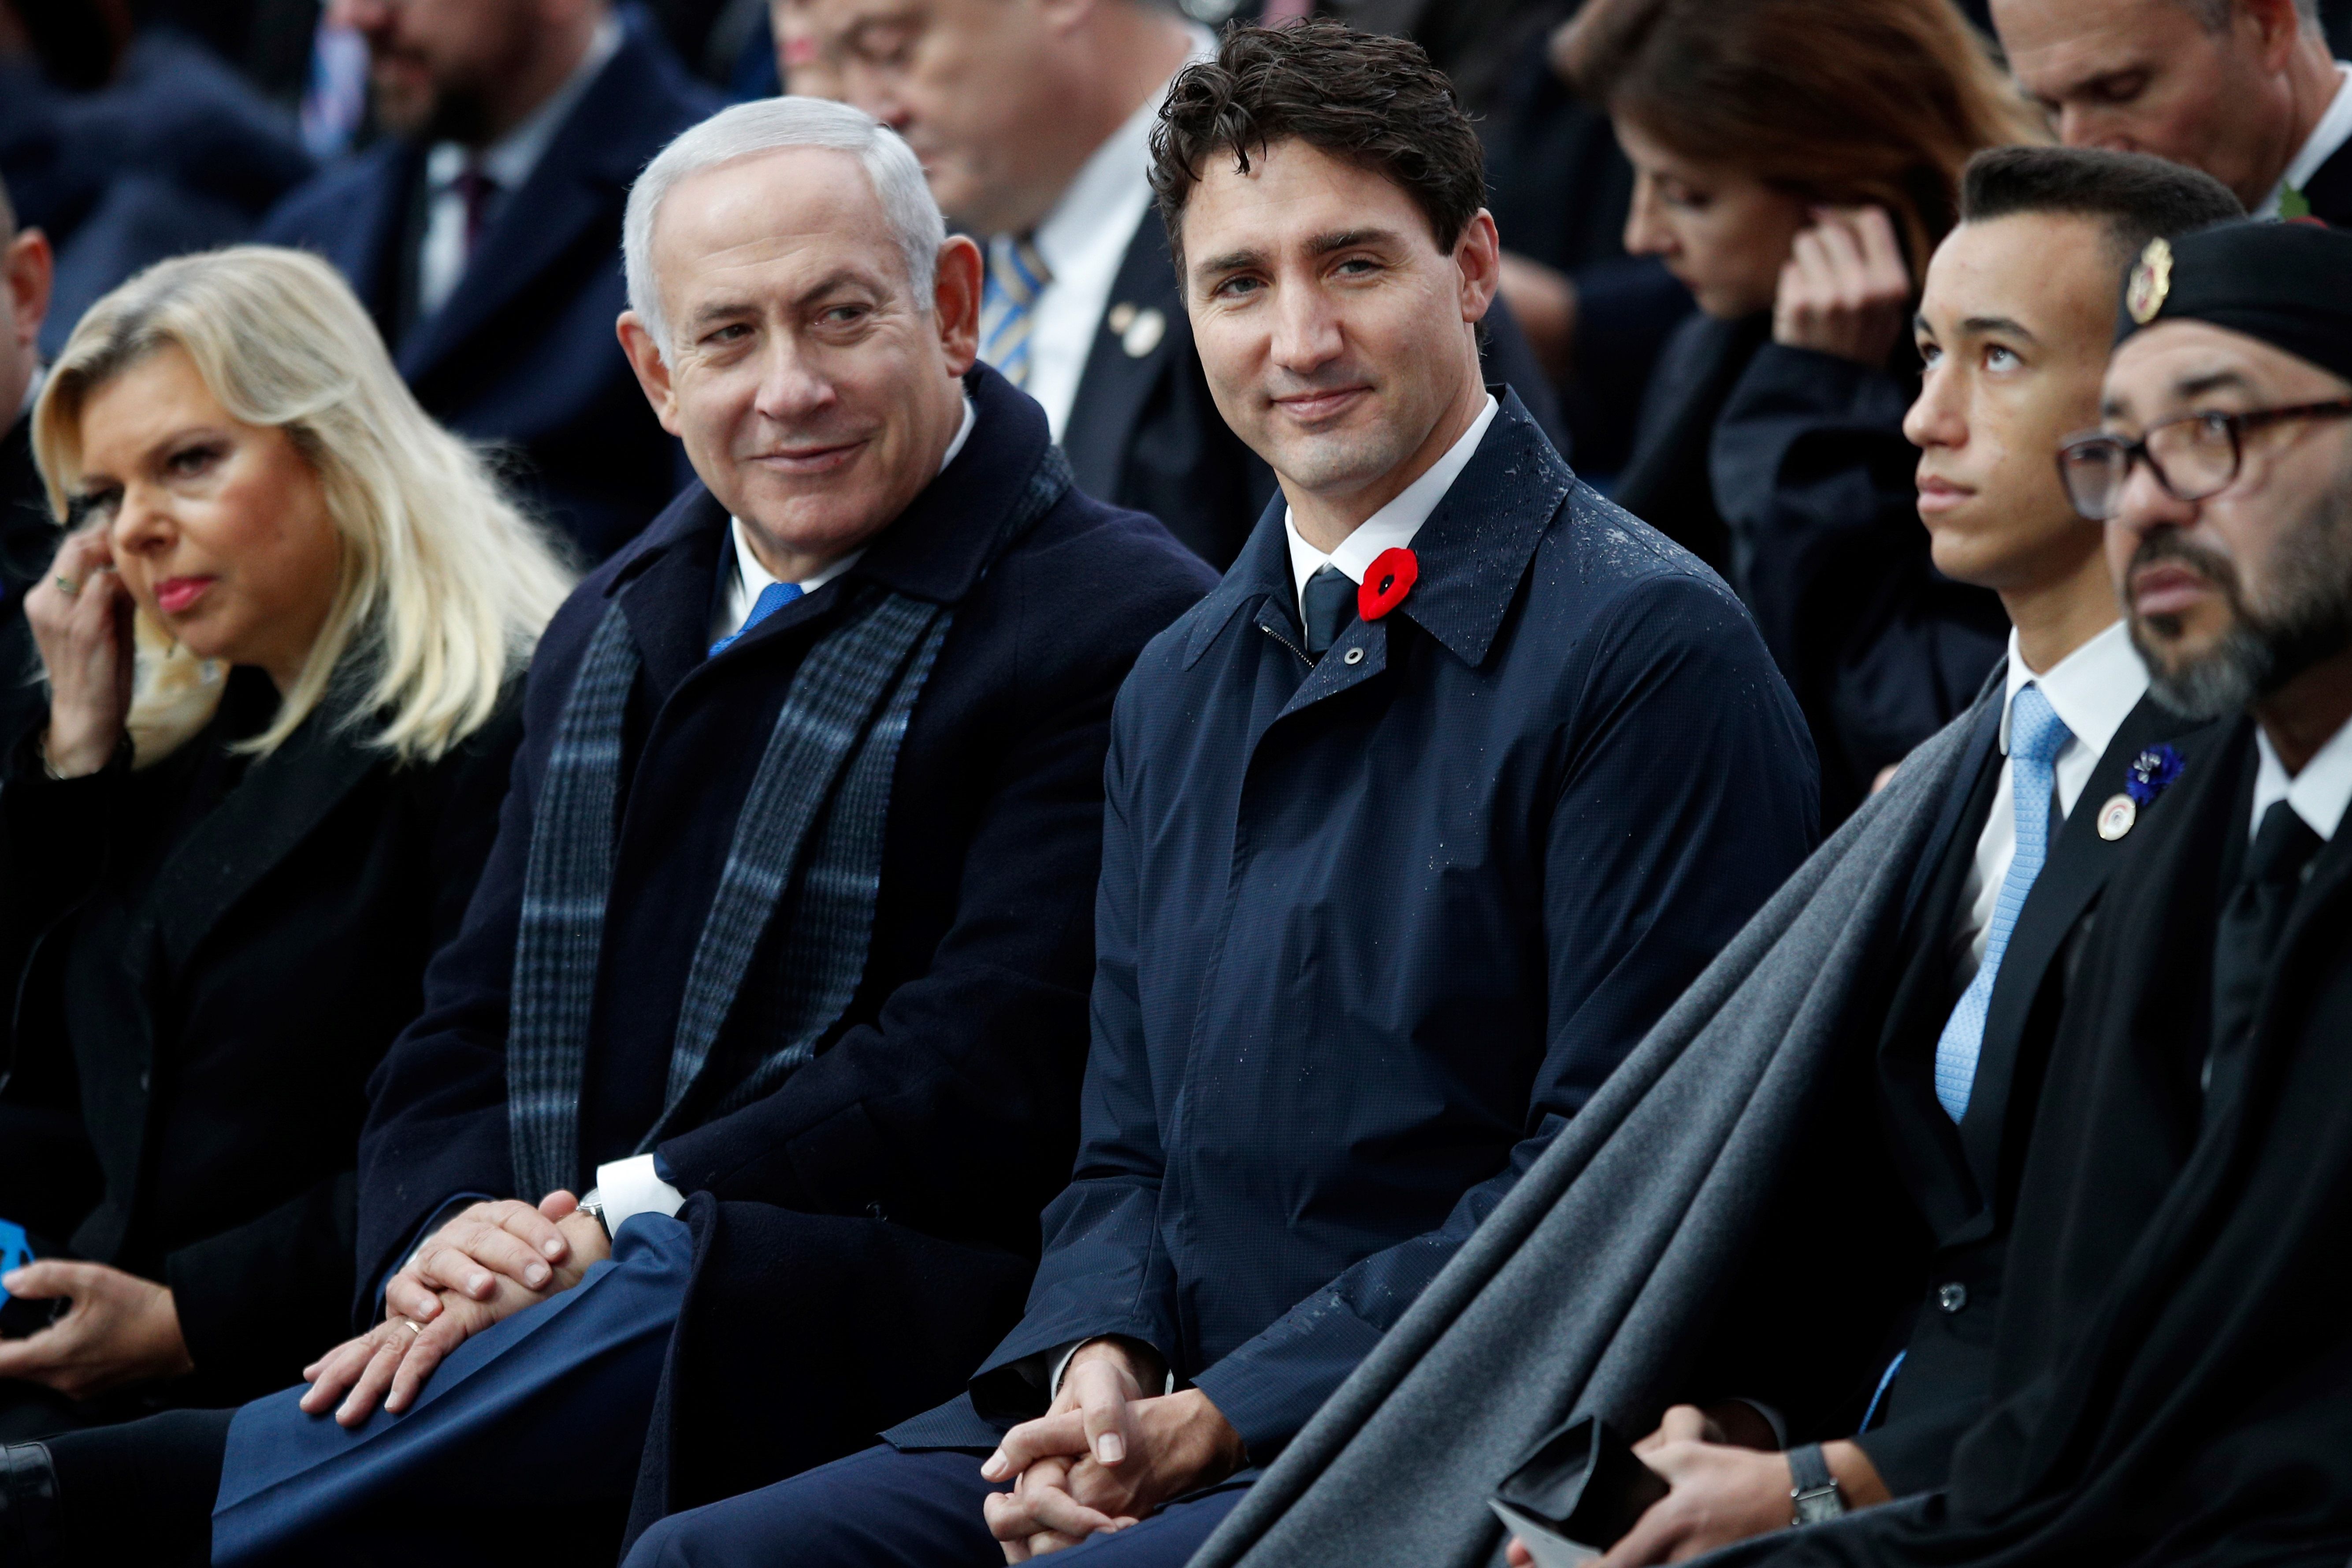 Netanyahu and Trudeau